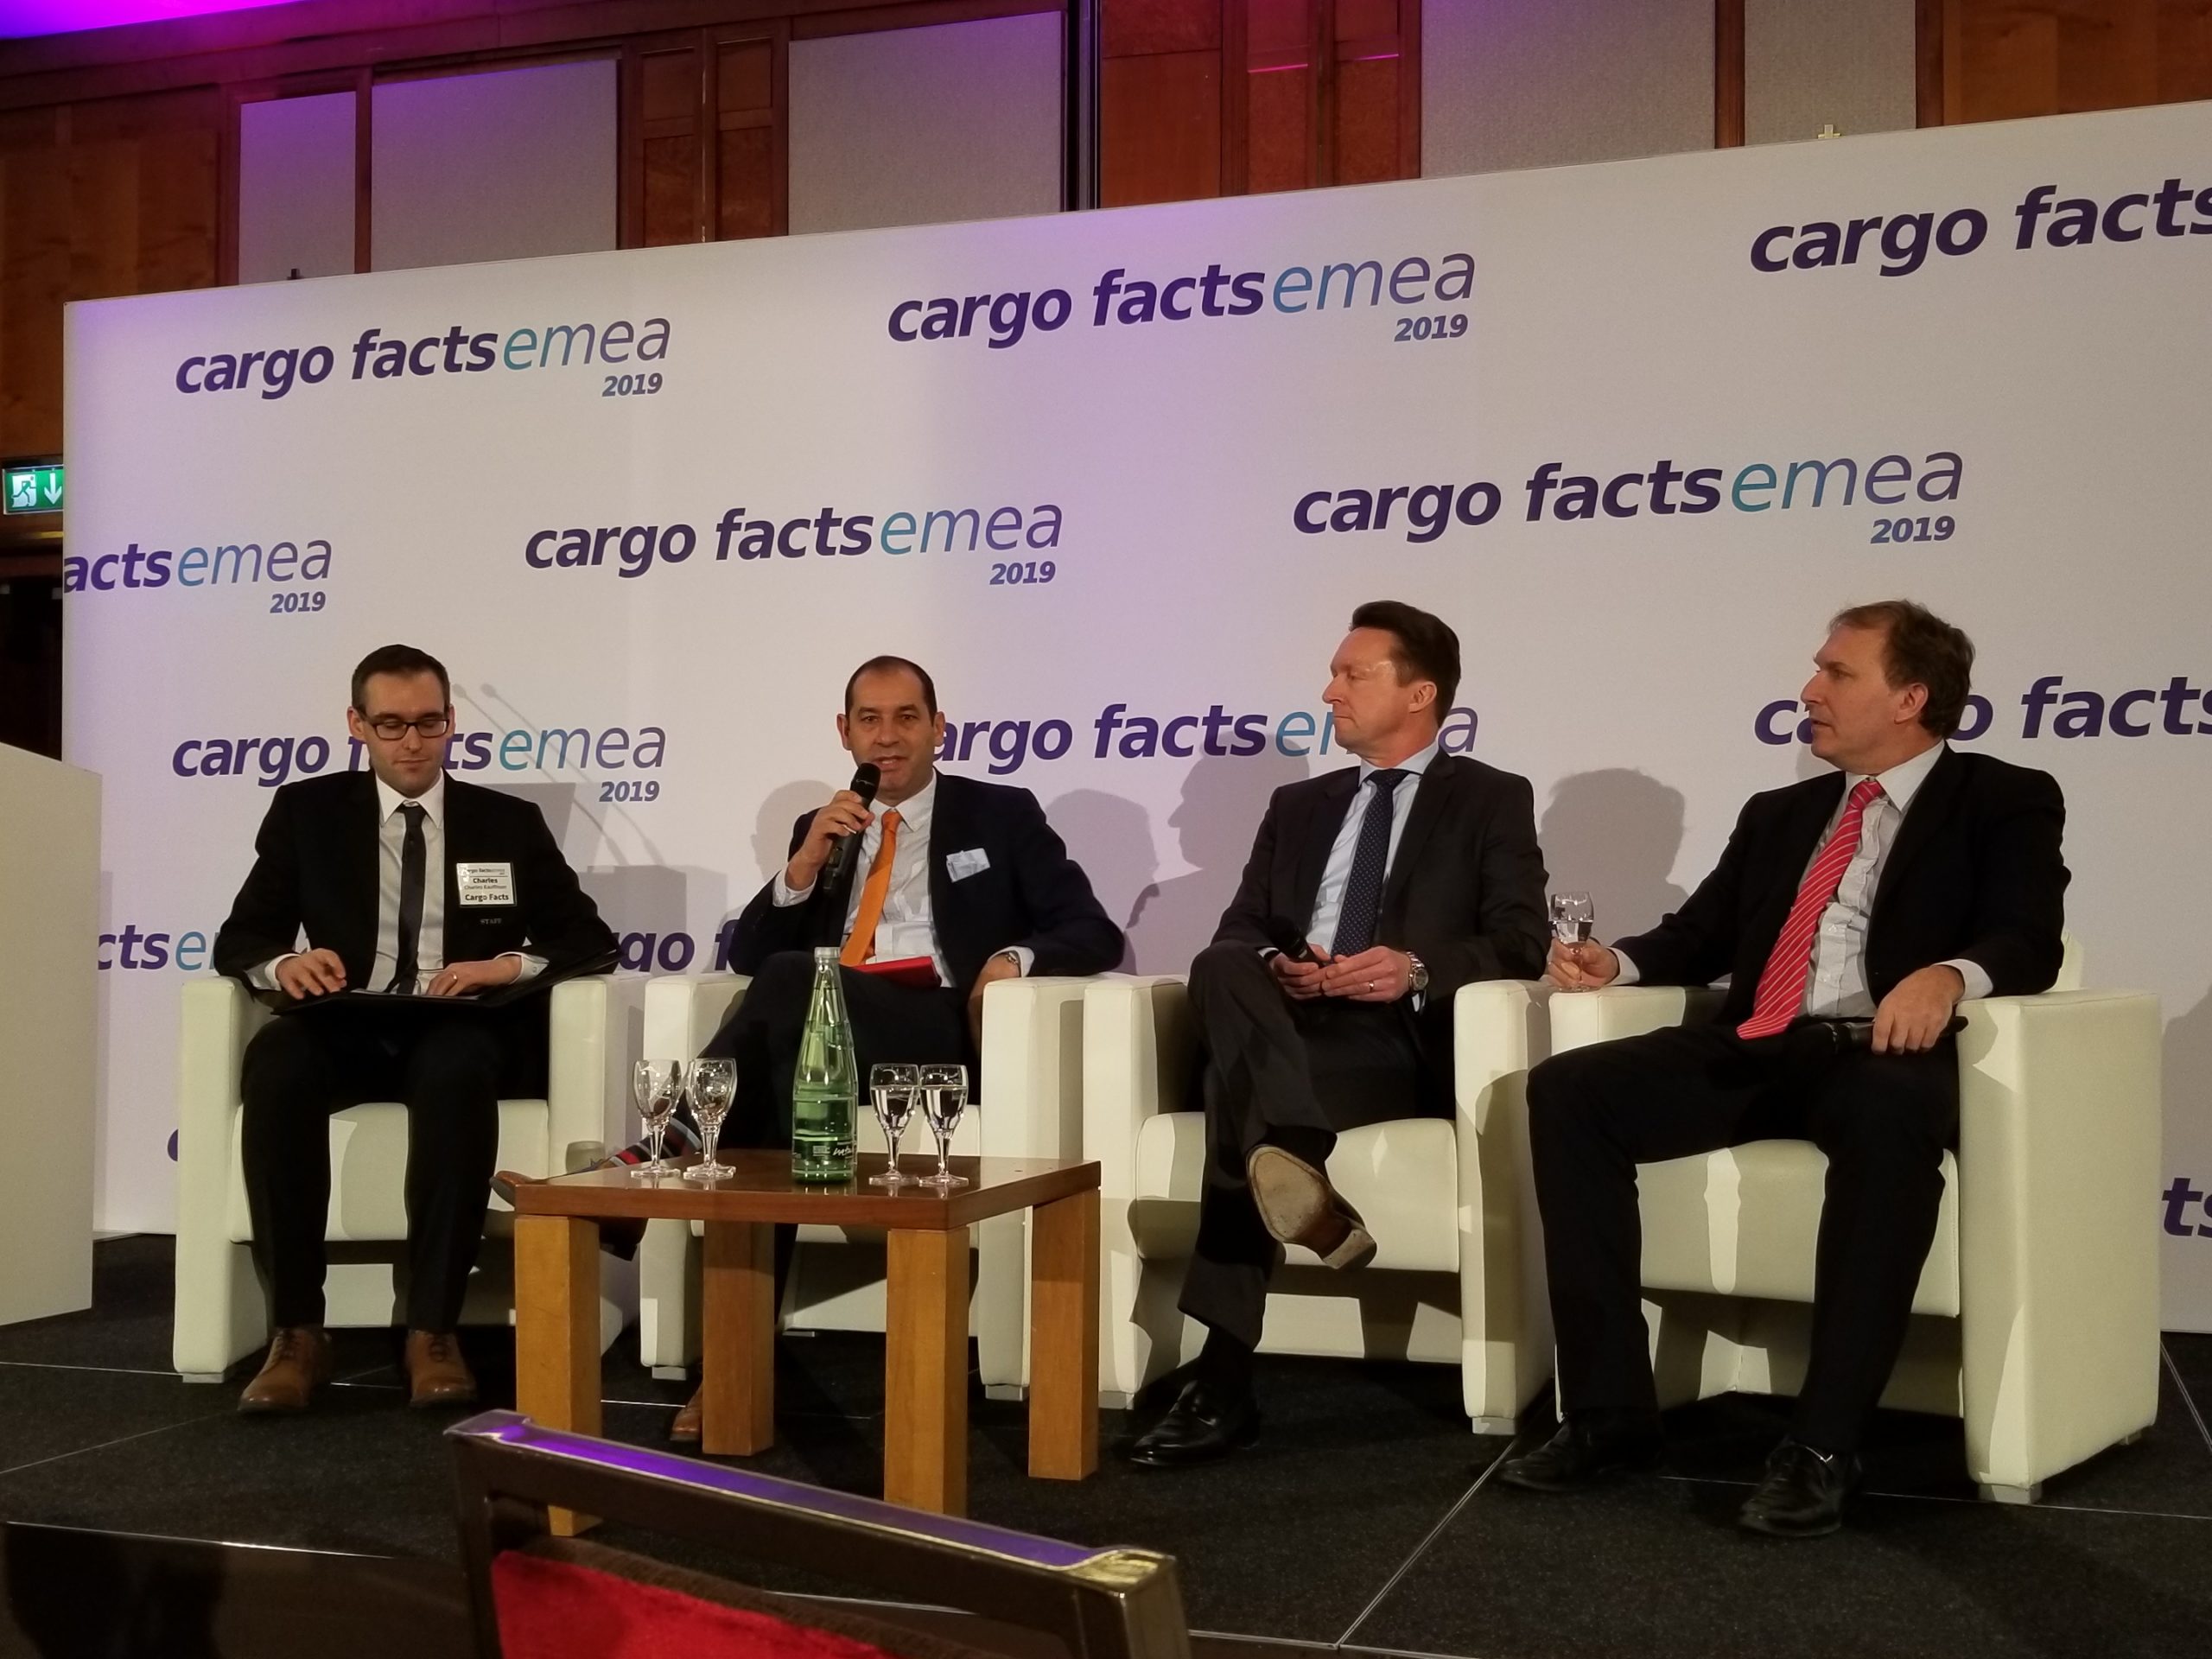 From left to right: Charles Kauffman, Cargo Facts; Chris Nielen, Cargolux Airllines; Michael Steen, Atlas Air Worldwide Holdings; and Robert van de Weg, Volga-Dnepr Group.